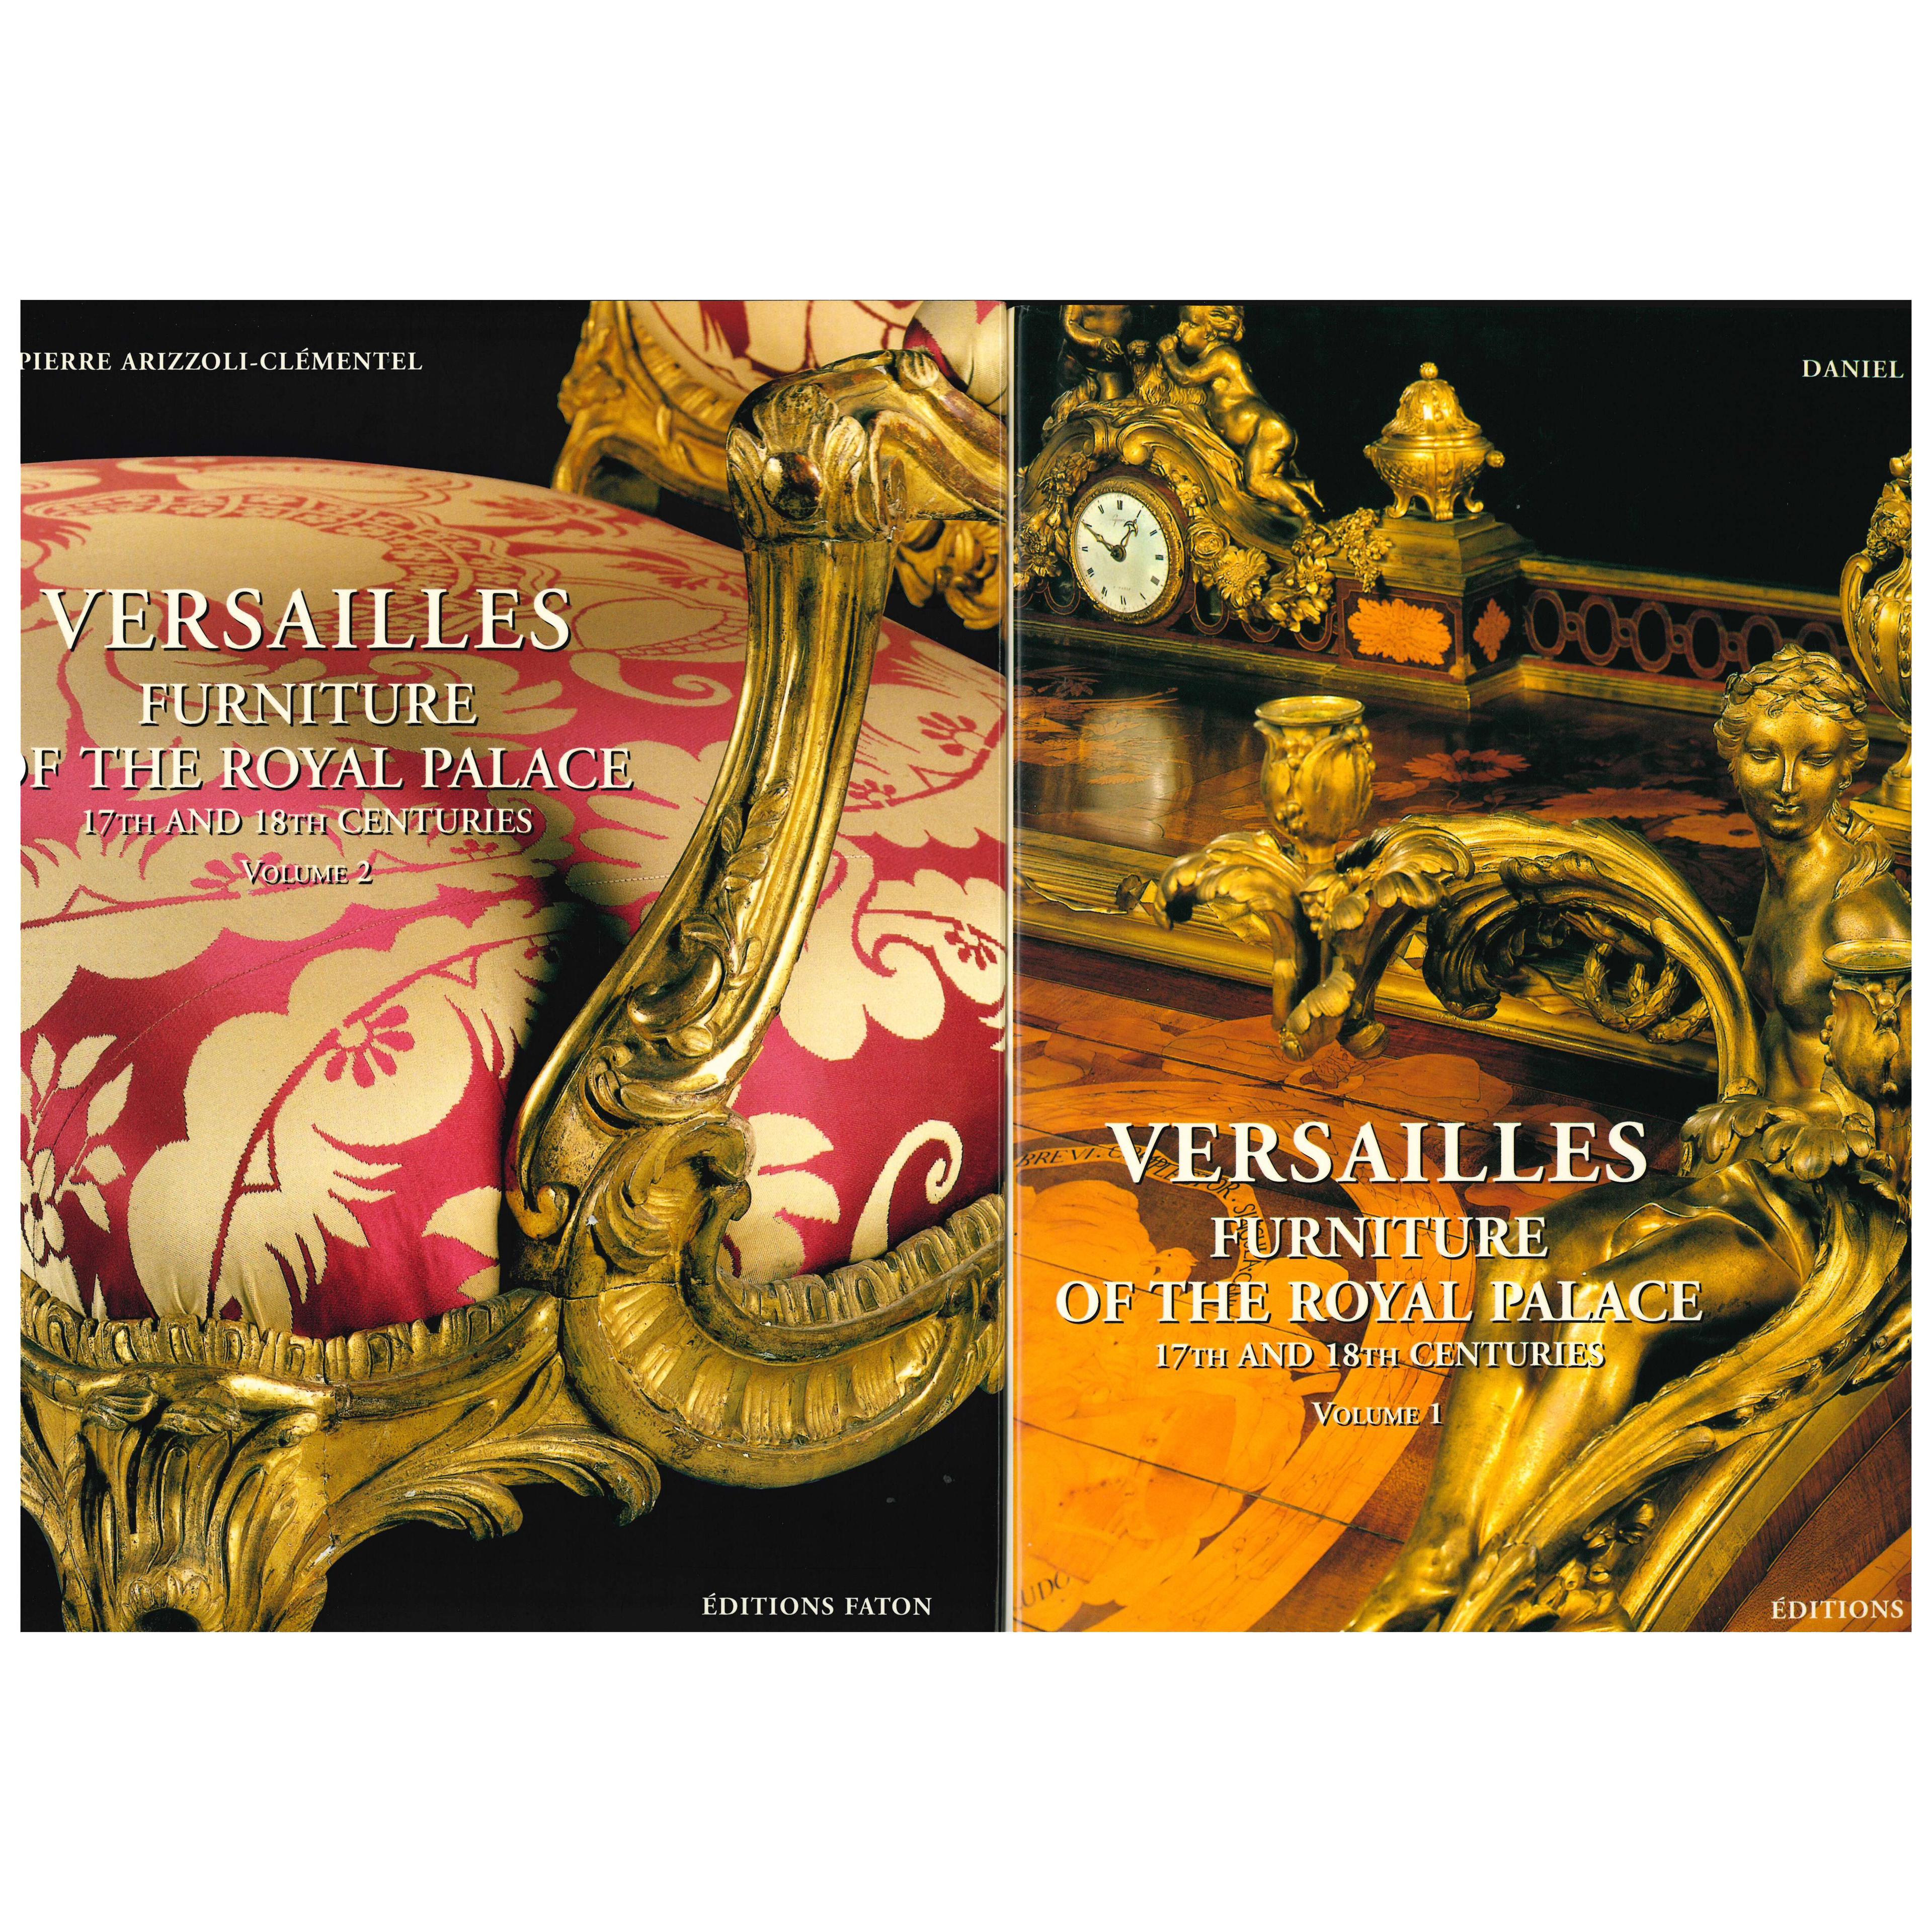 THE FURNITURE OF VERSAILLES - 2 book set